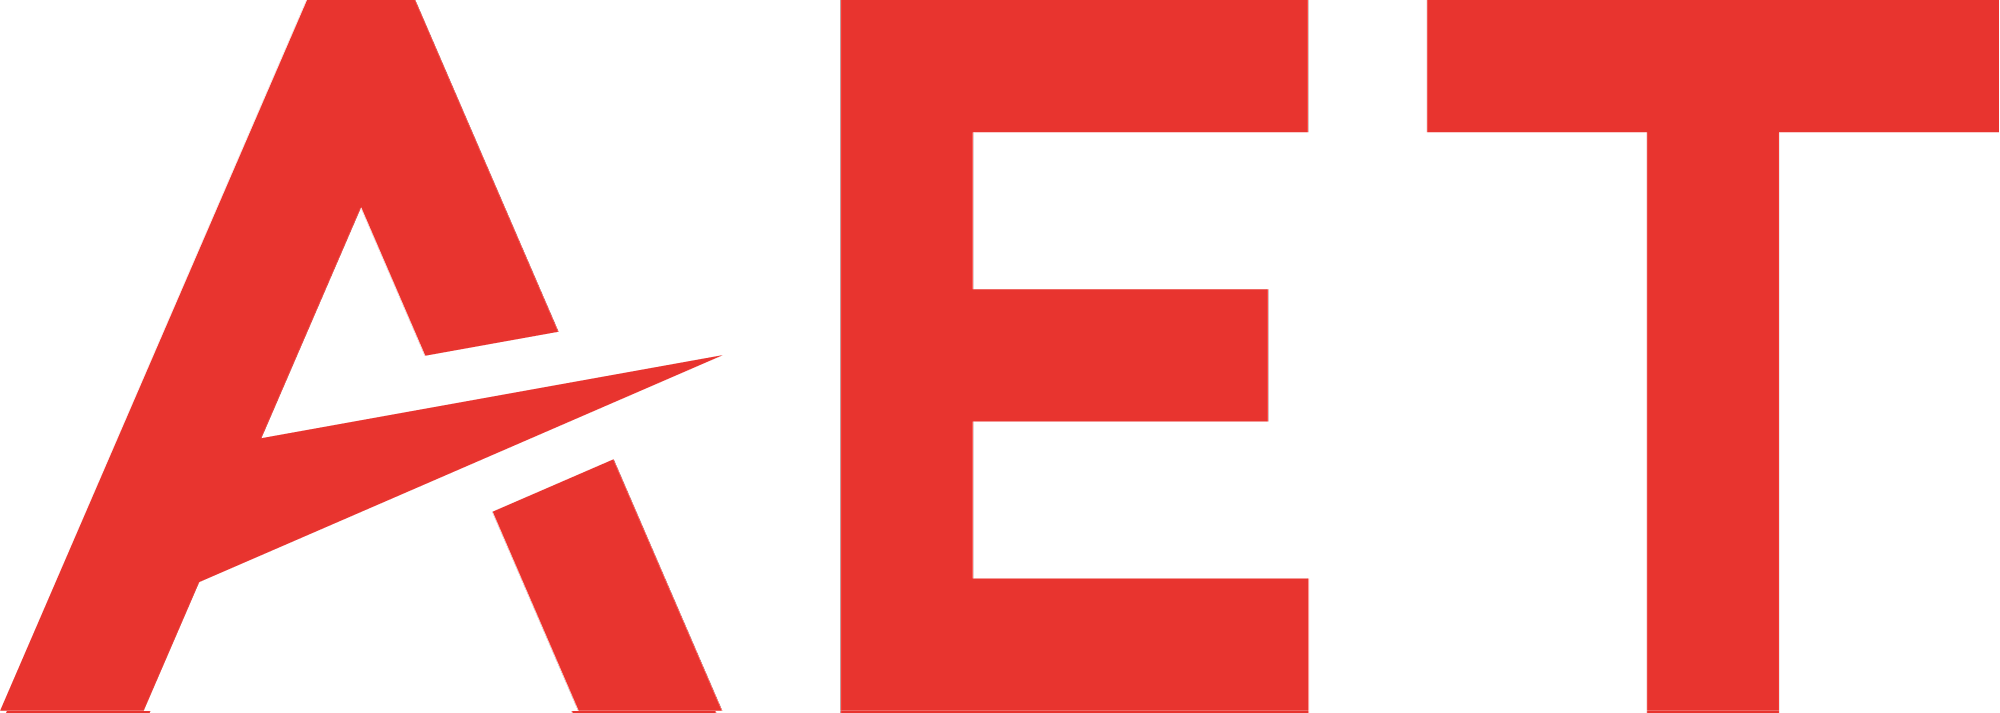 AET Associates, Inc. logo